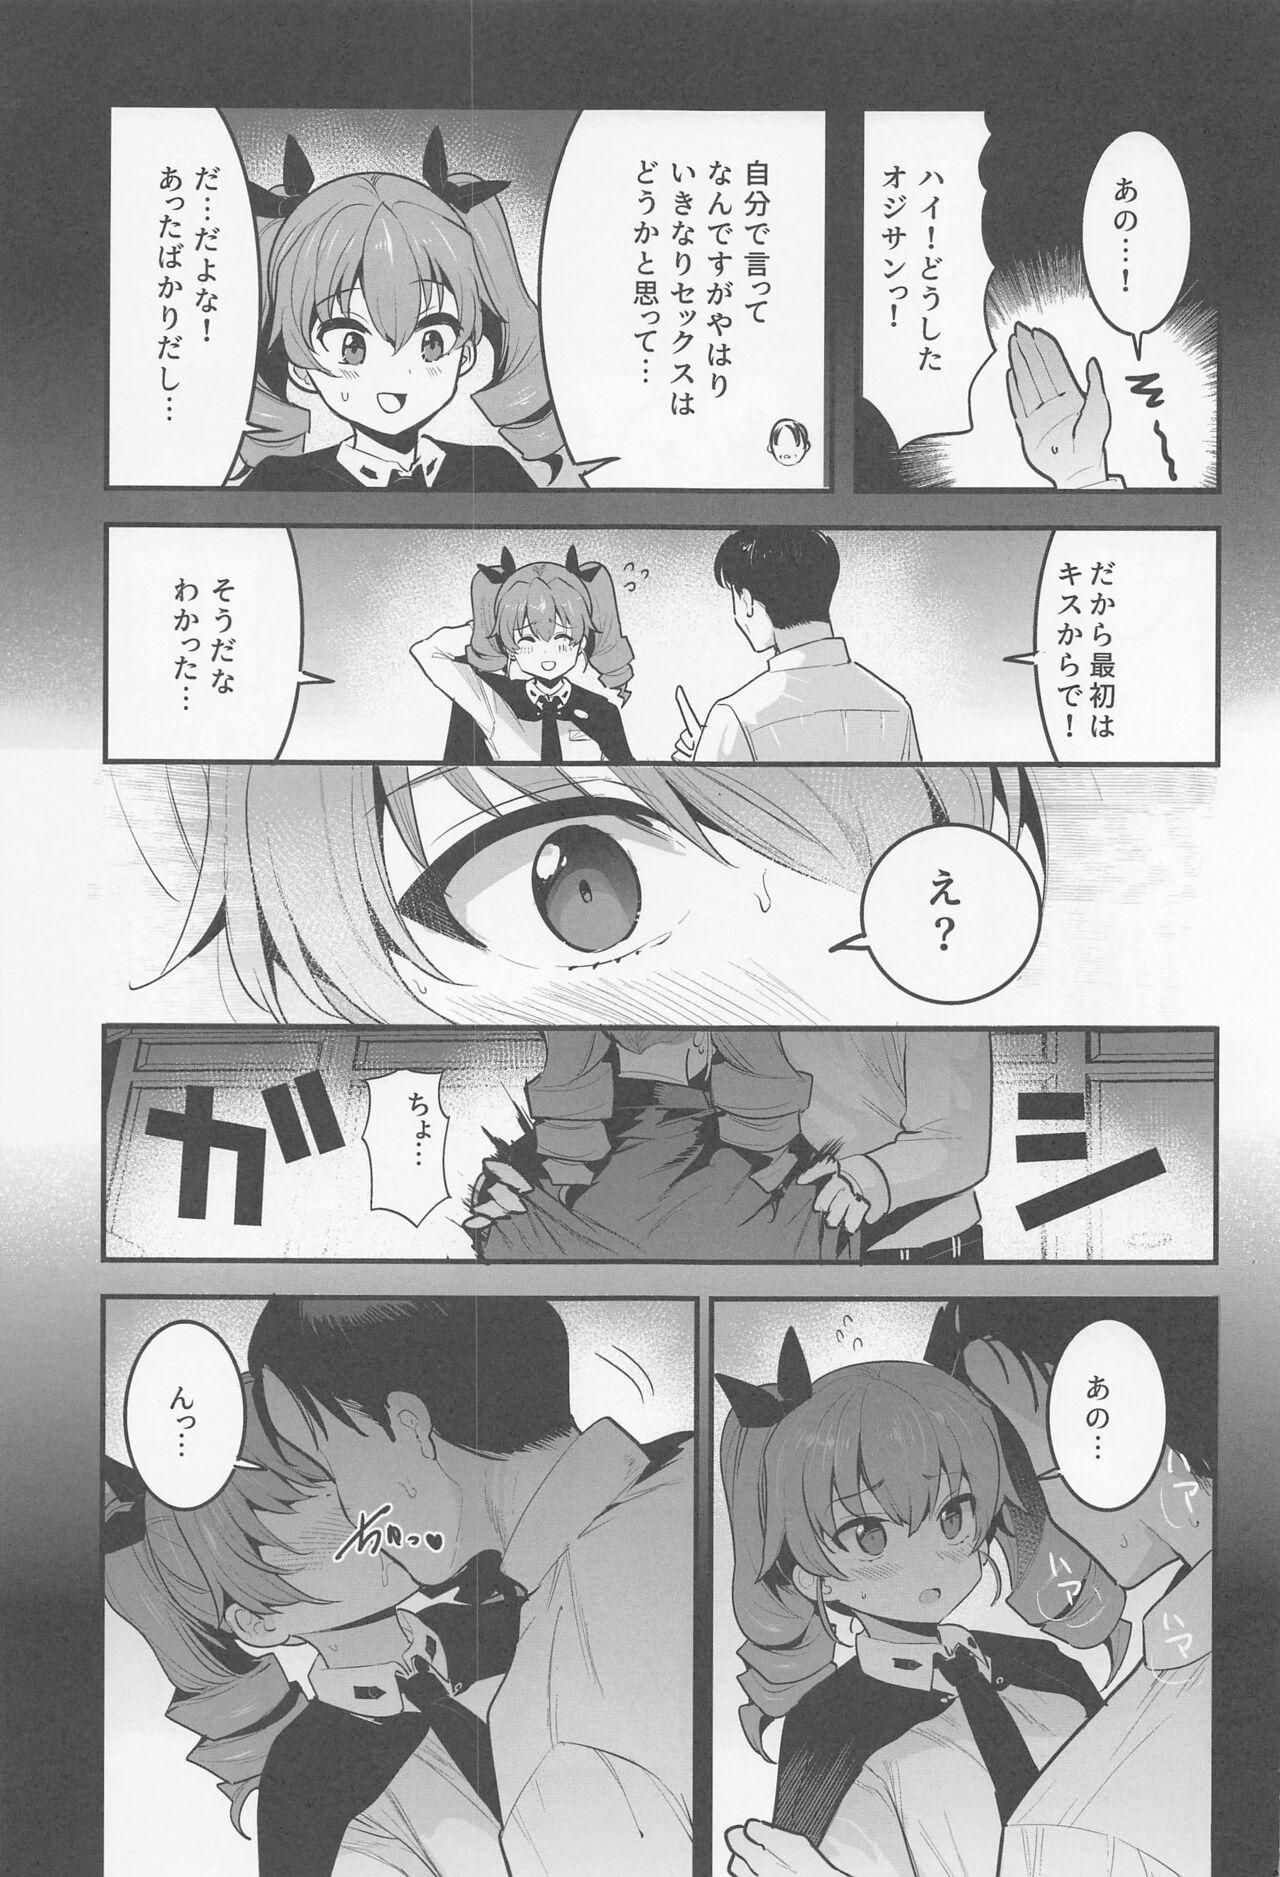 Bisex anchobi dogezadeonegaishitaraippatsuyarasetekuremashita - Girls und panzer Strapon - Page 4